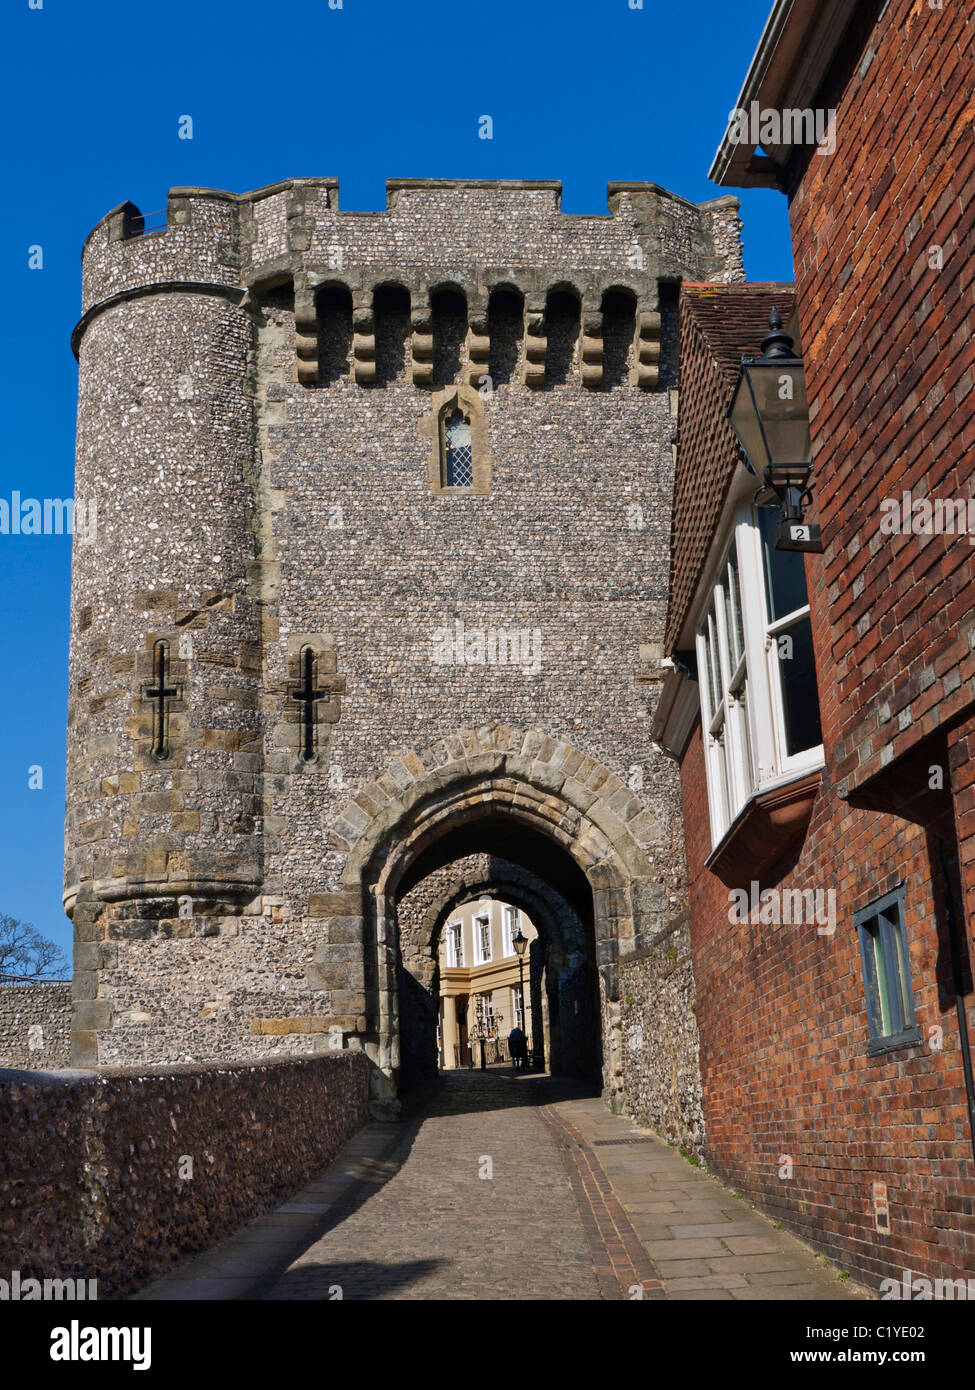 LEWES CASTLE The Barbican gatehouse, Lewes Castle, East Sussex, England UK Stock Photo